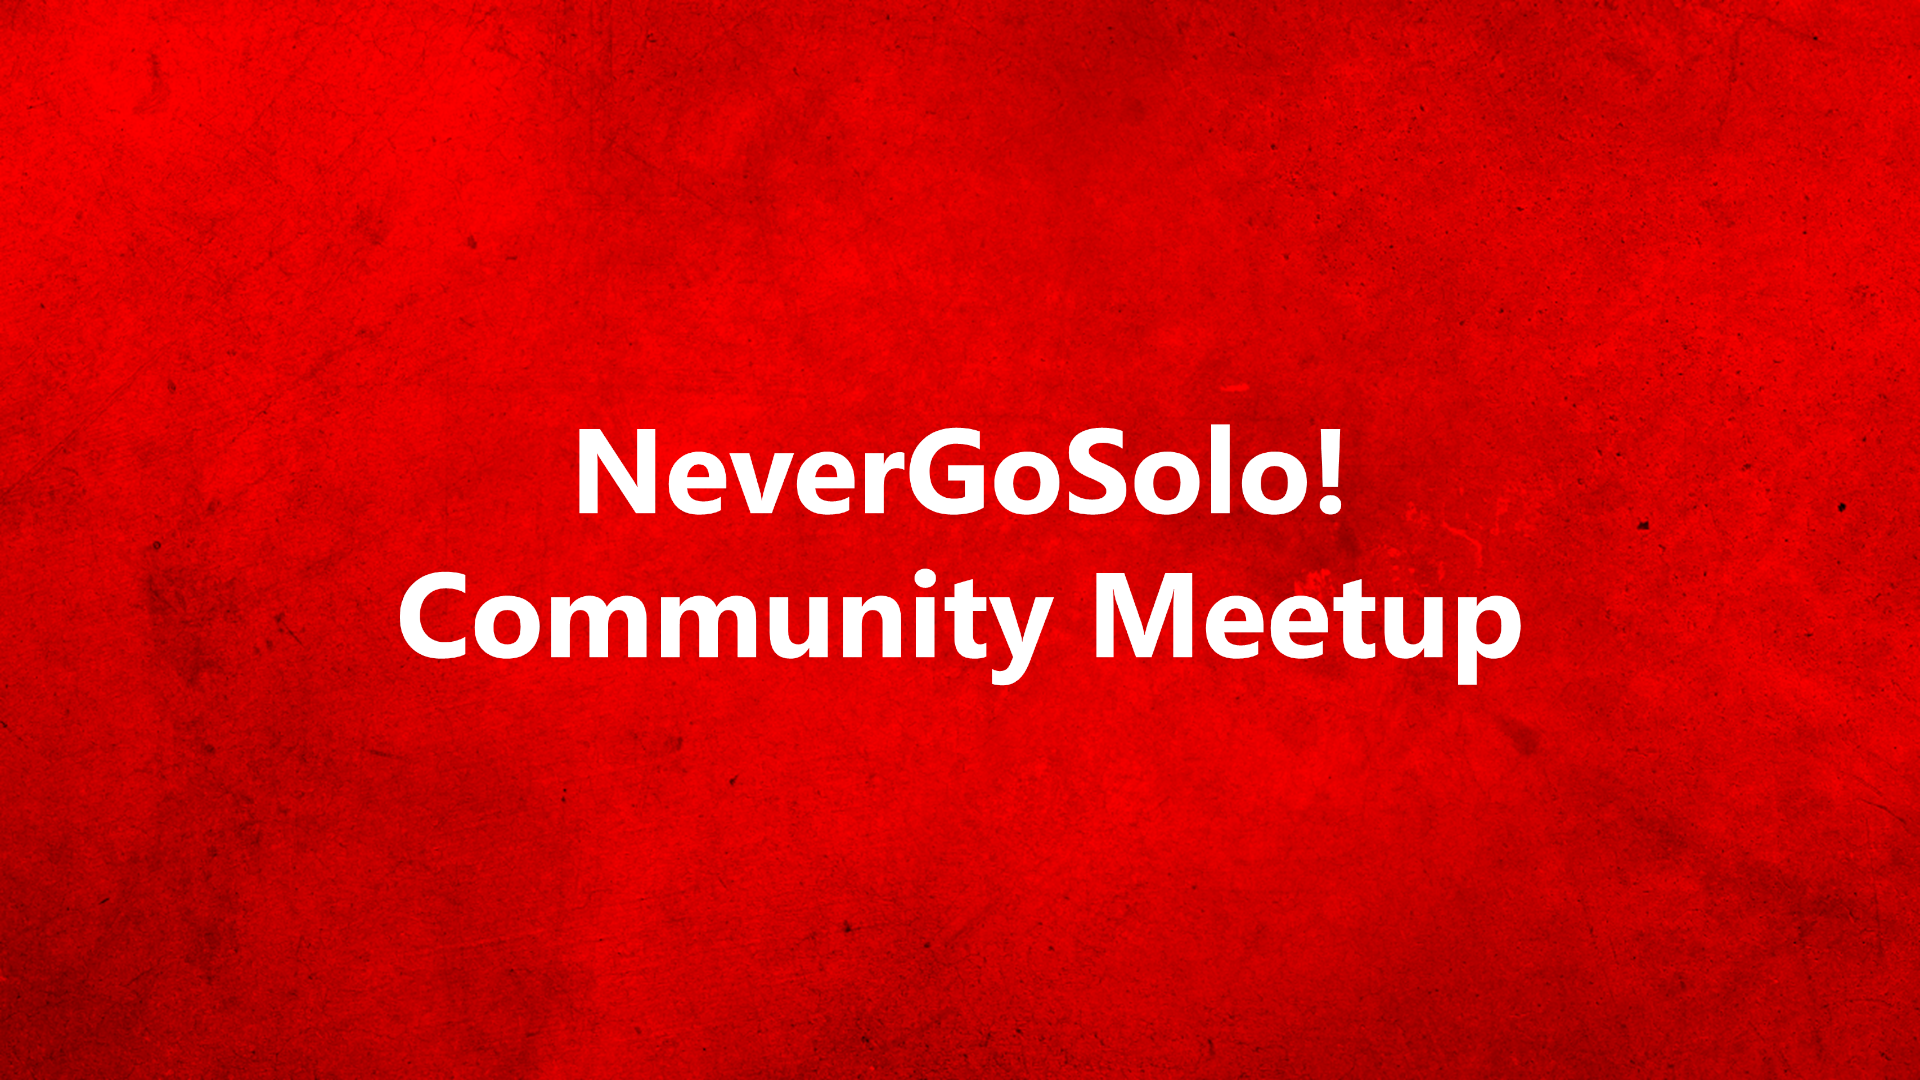 NeverGoSolo! Community Meetup